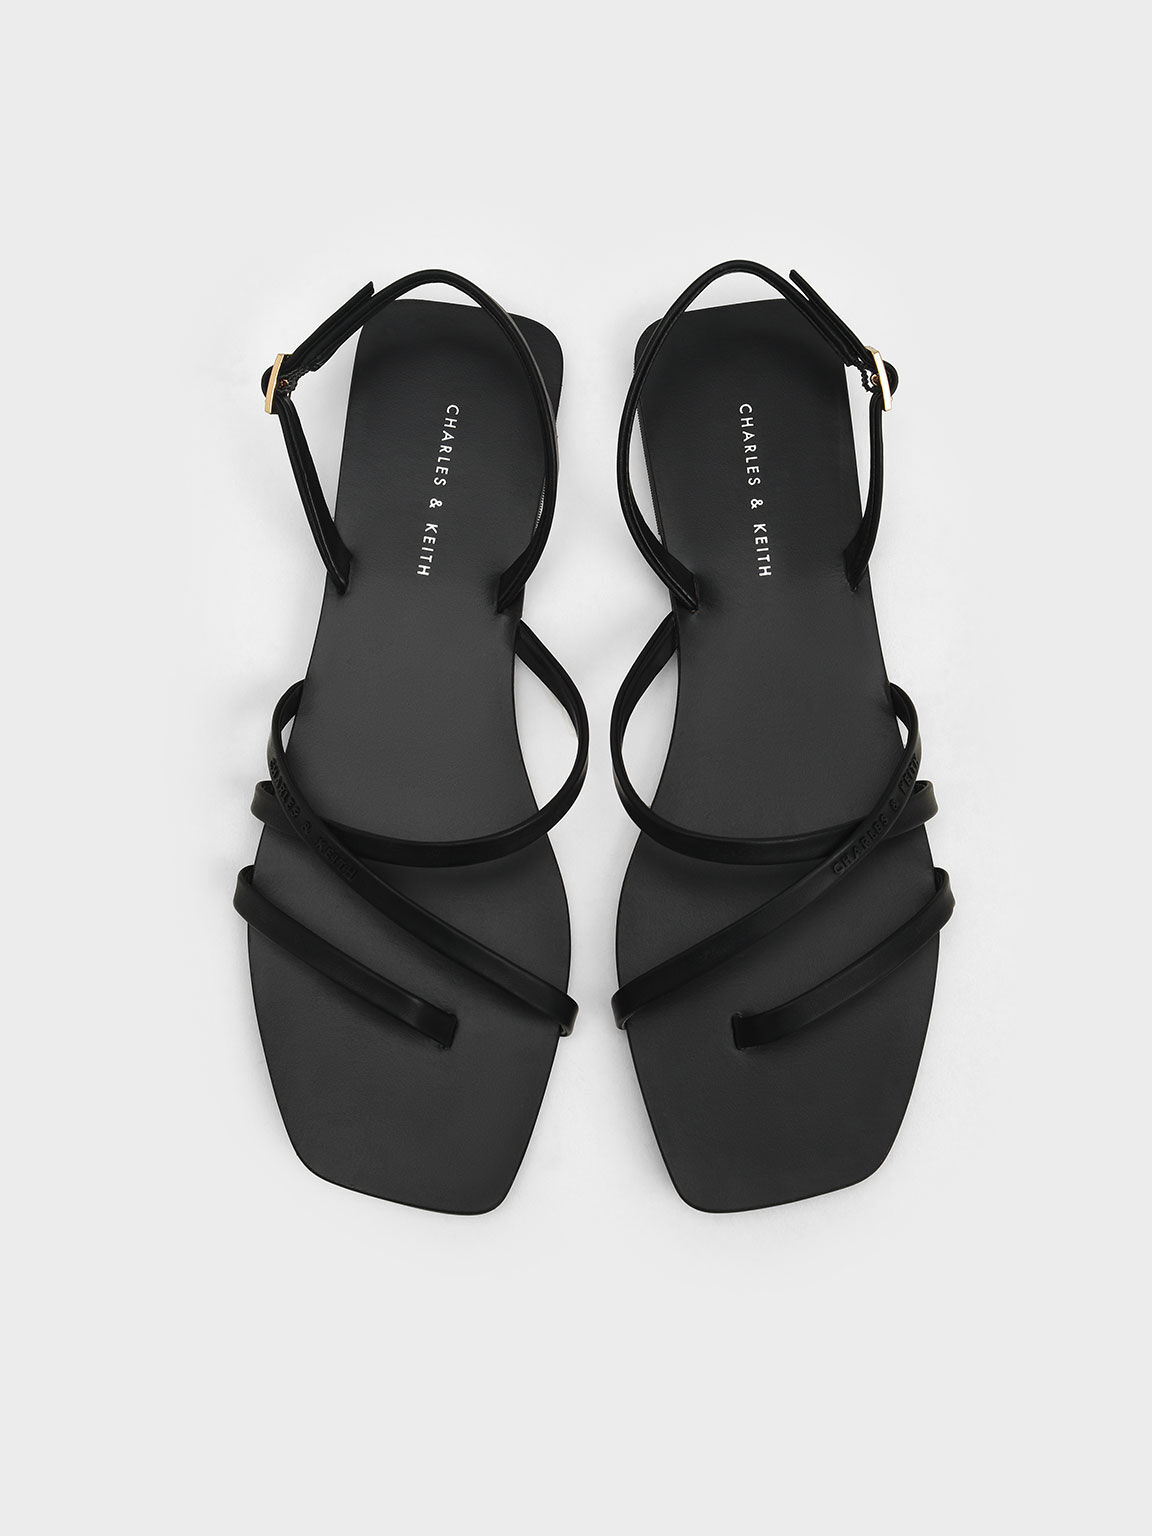 Strappy Square-Toe Slingback Sandals, Black, hi-res